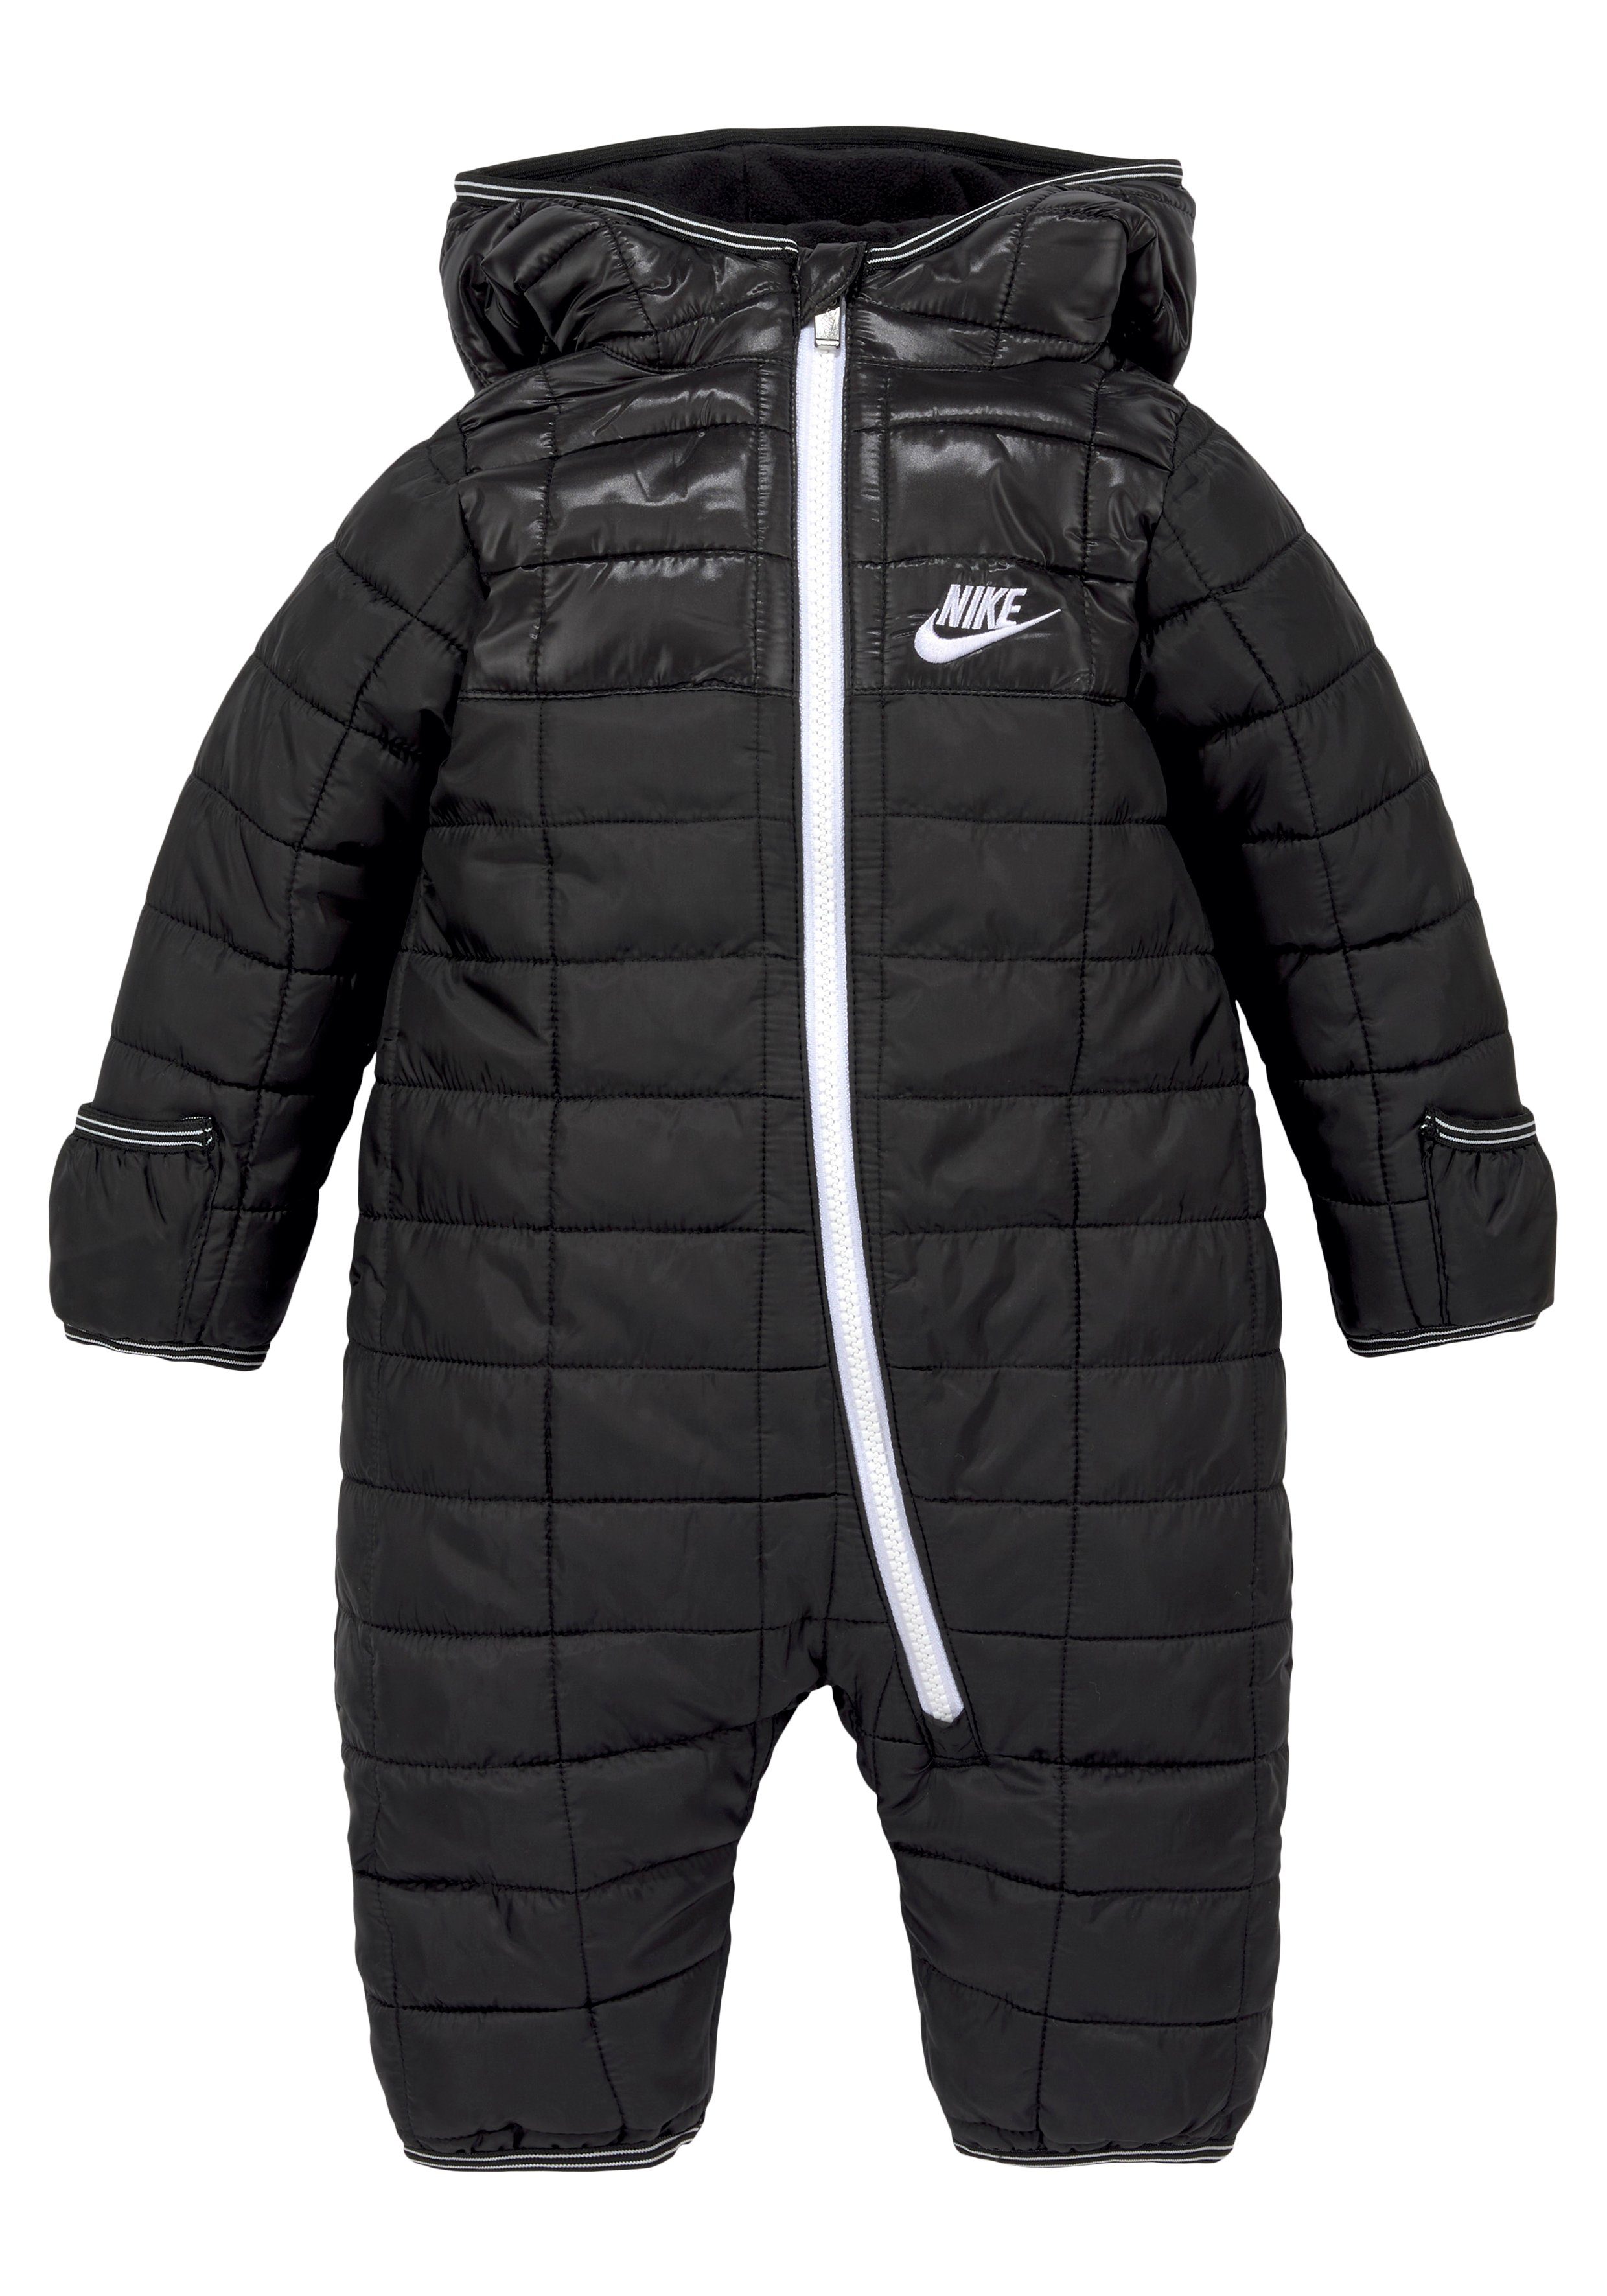 SNOWSUIT Nike COLORBLOCK Schneeoverall schwarz Sportswear